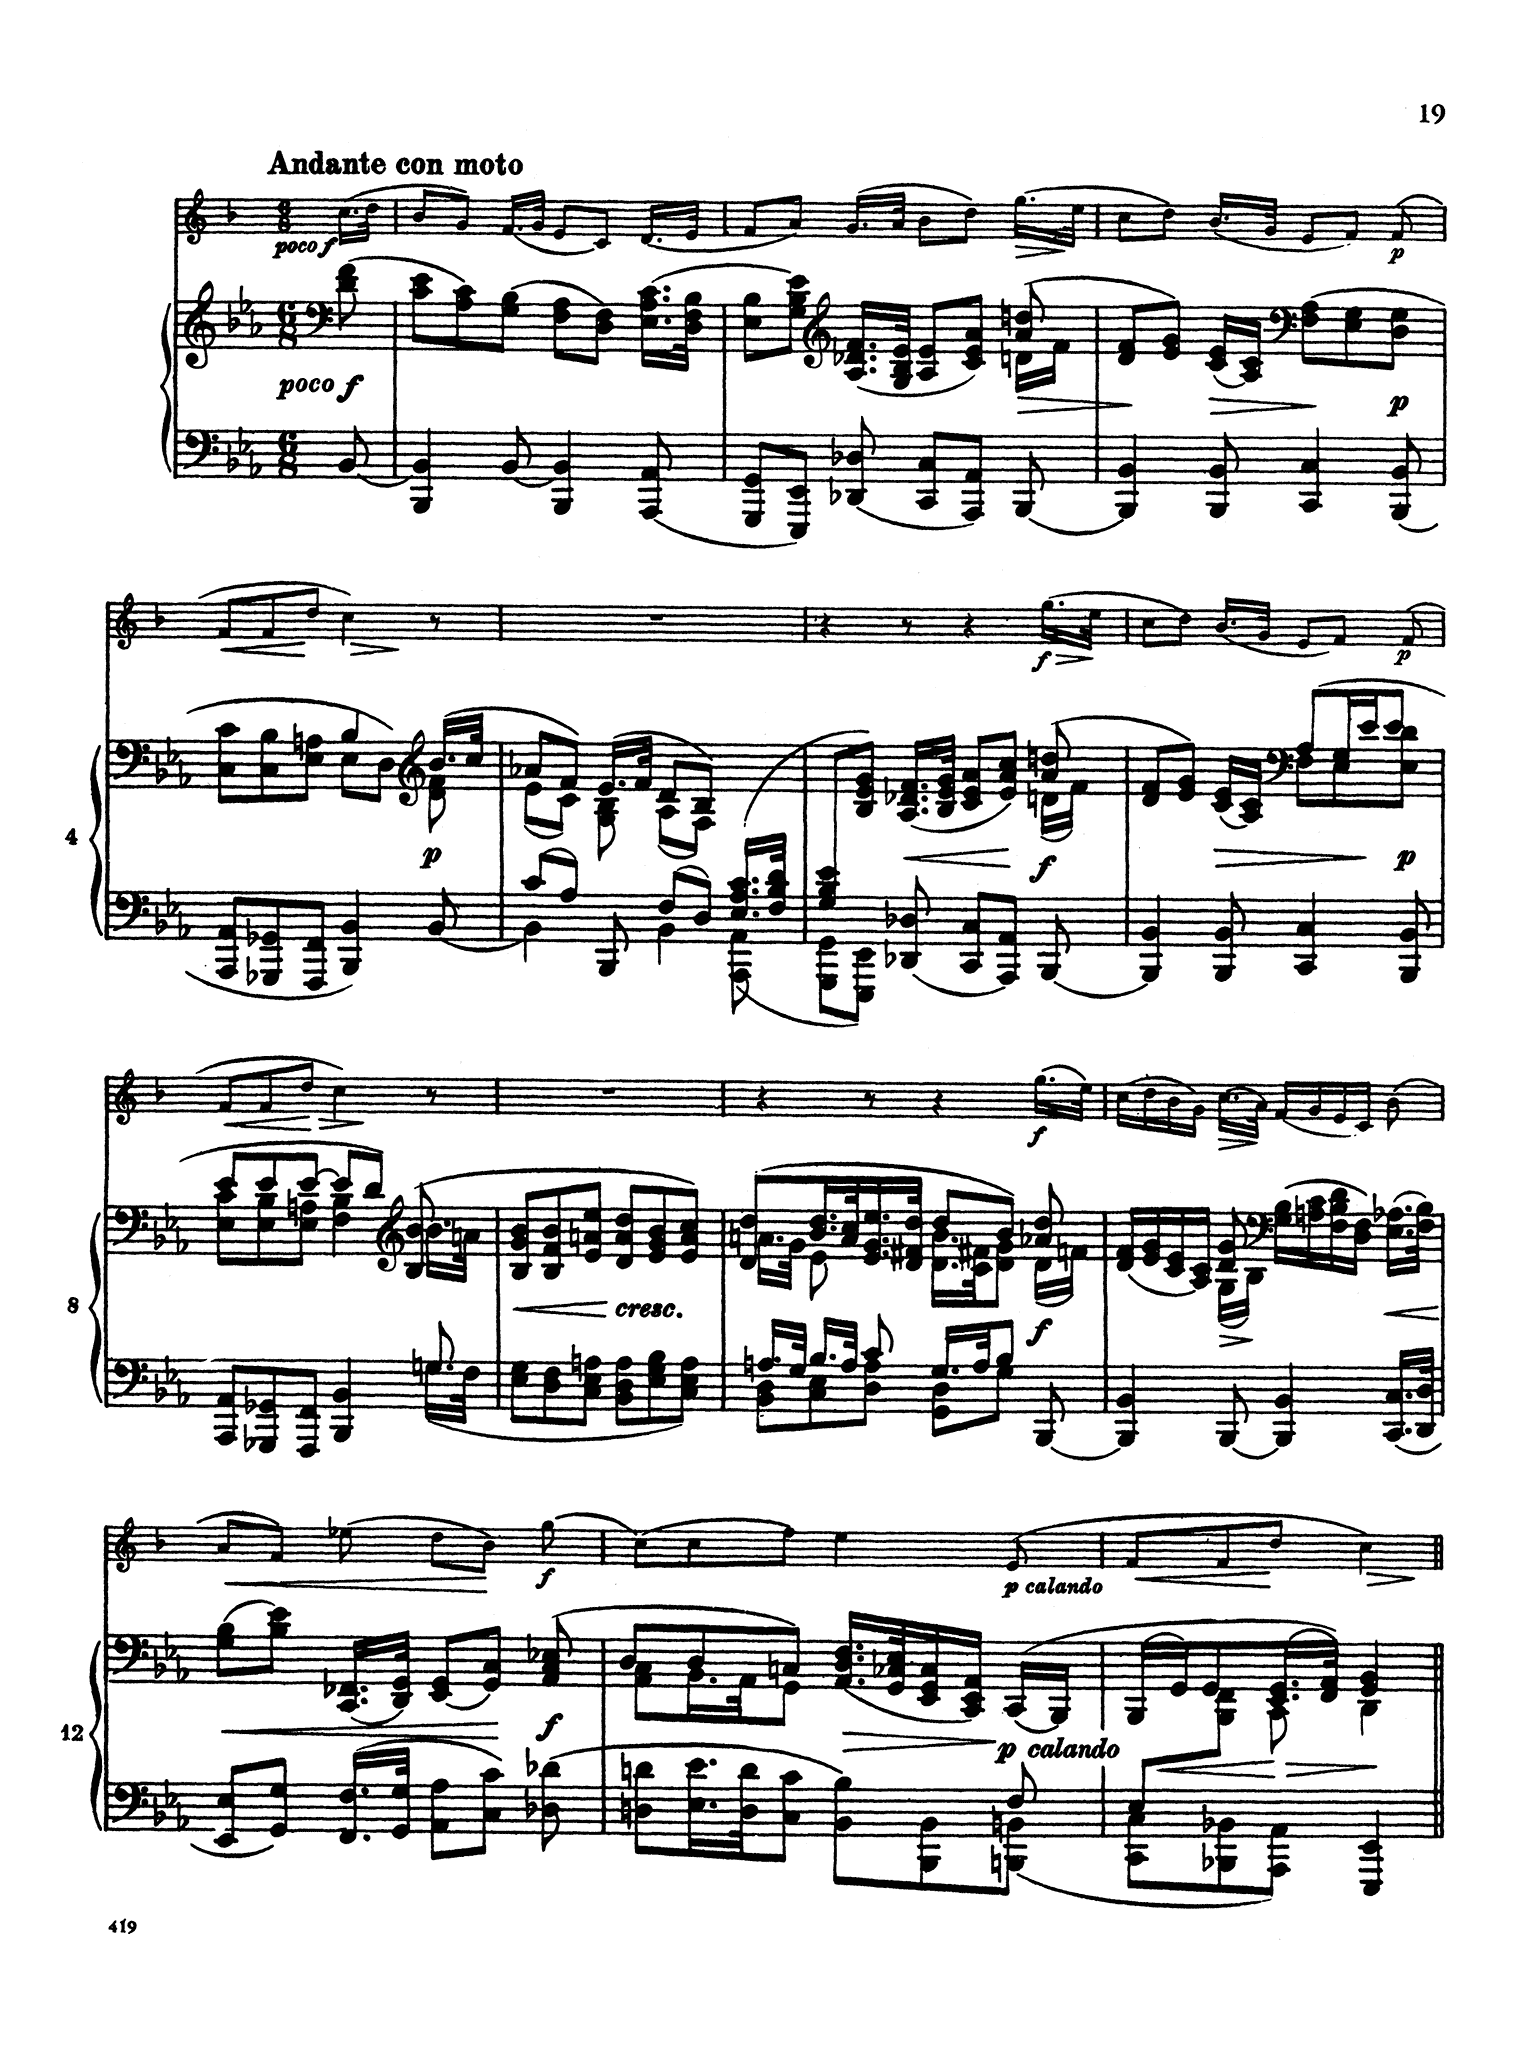 Brahms: Sonata No. 2 in Eb Major Op 120 for Clarinet & Piano